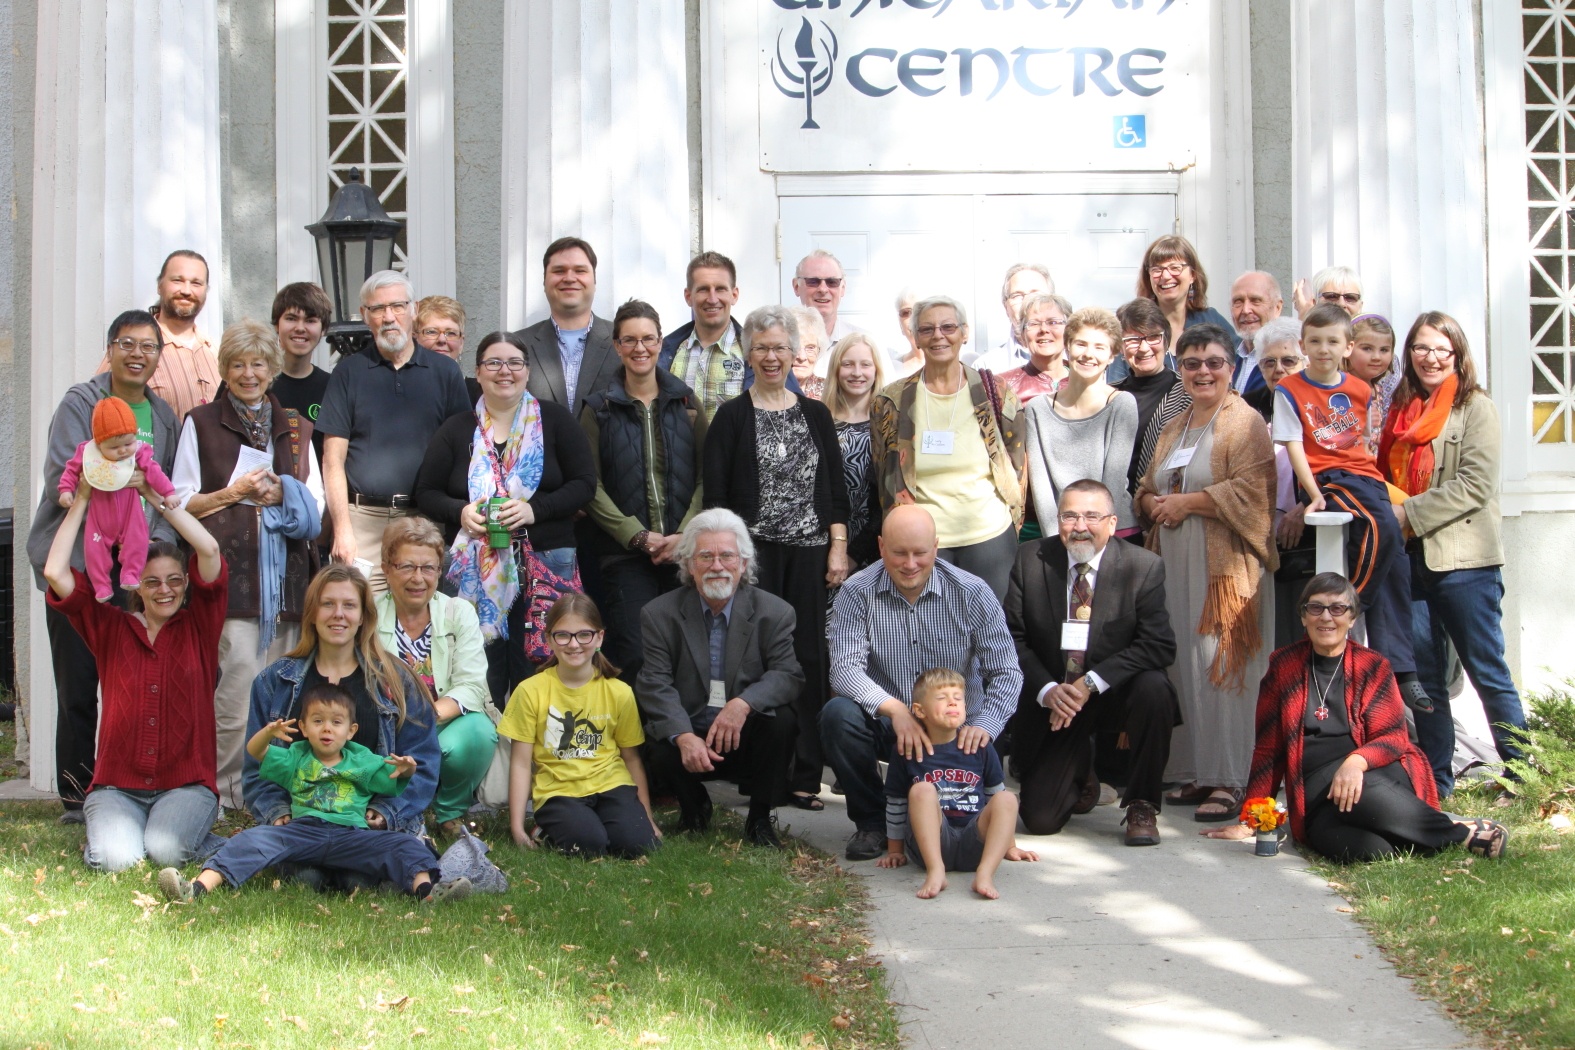 Unitarian Fellowship of Regina